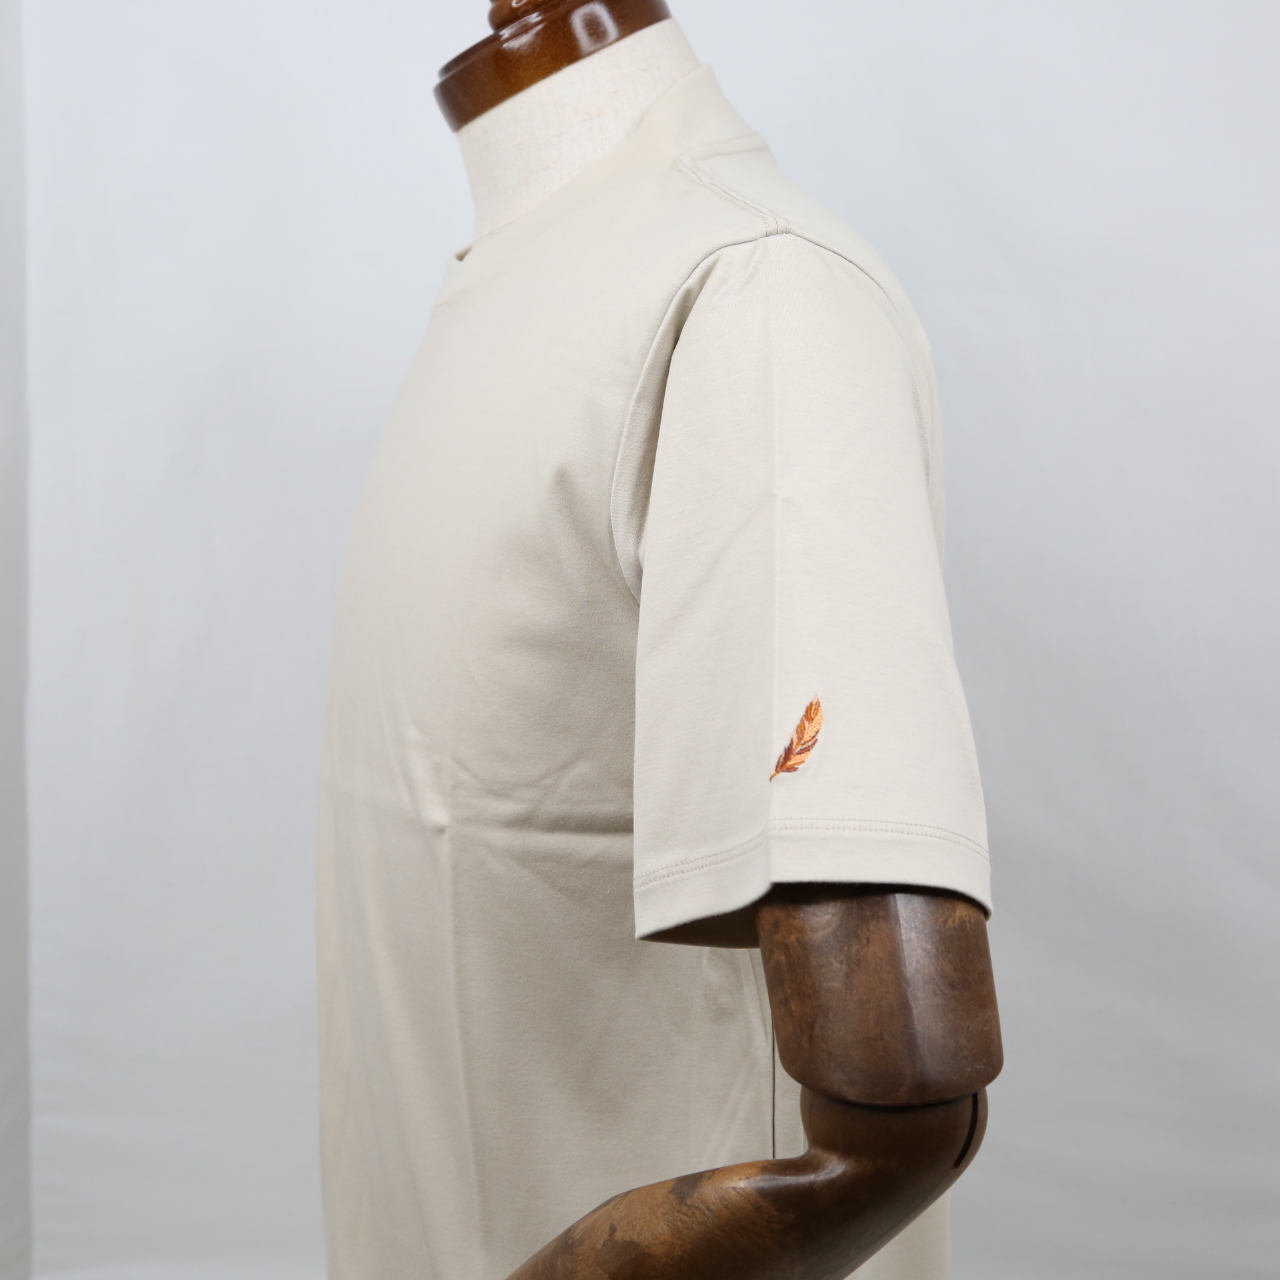 【NEW】プレミアムドレス Tシャツ  FATTURA  シャツ  半袖  袖口刺繍  ベージュ  日本製